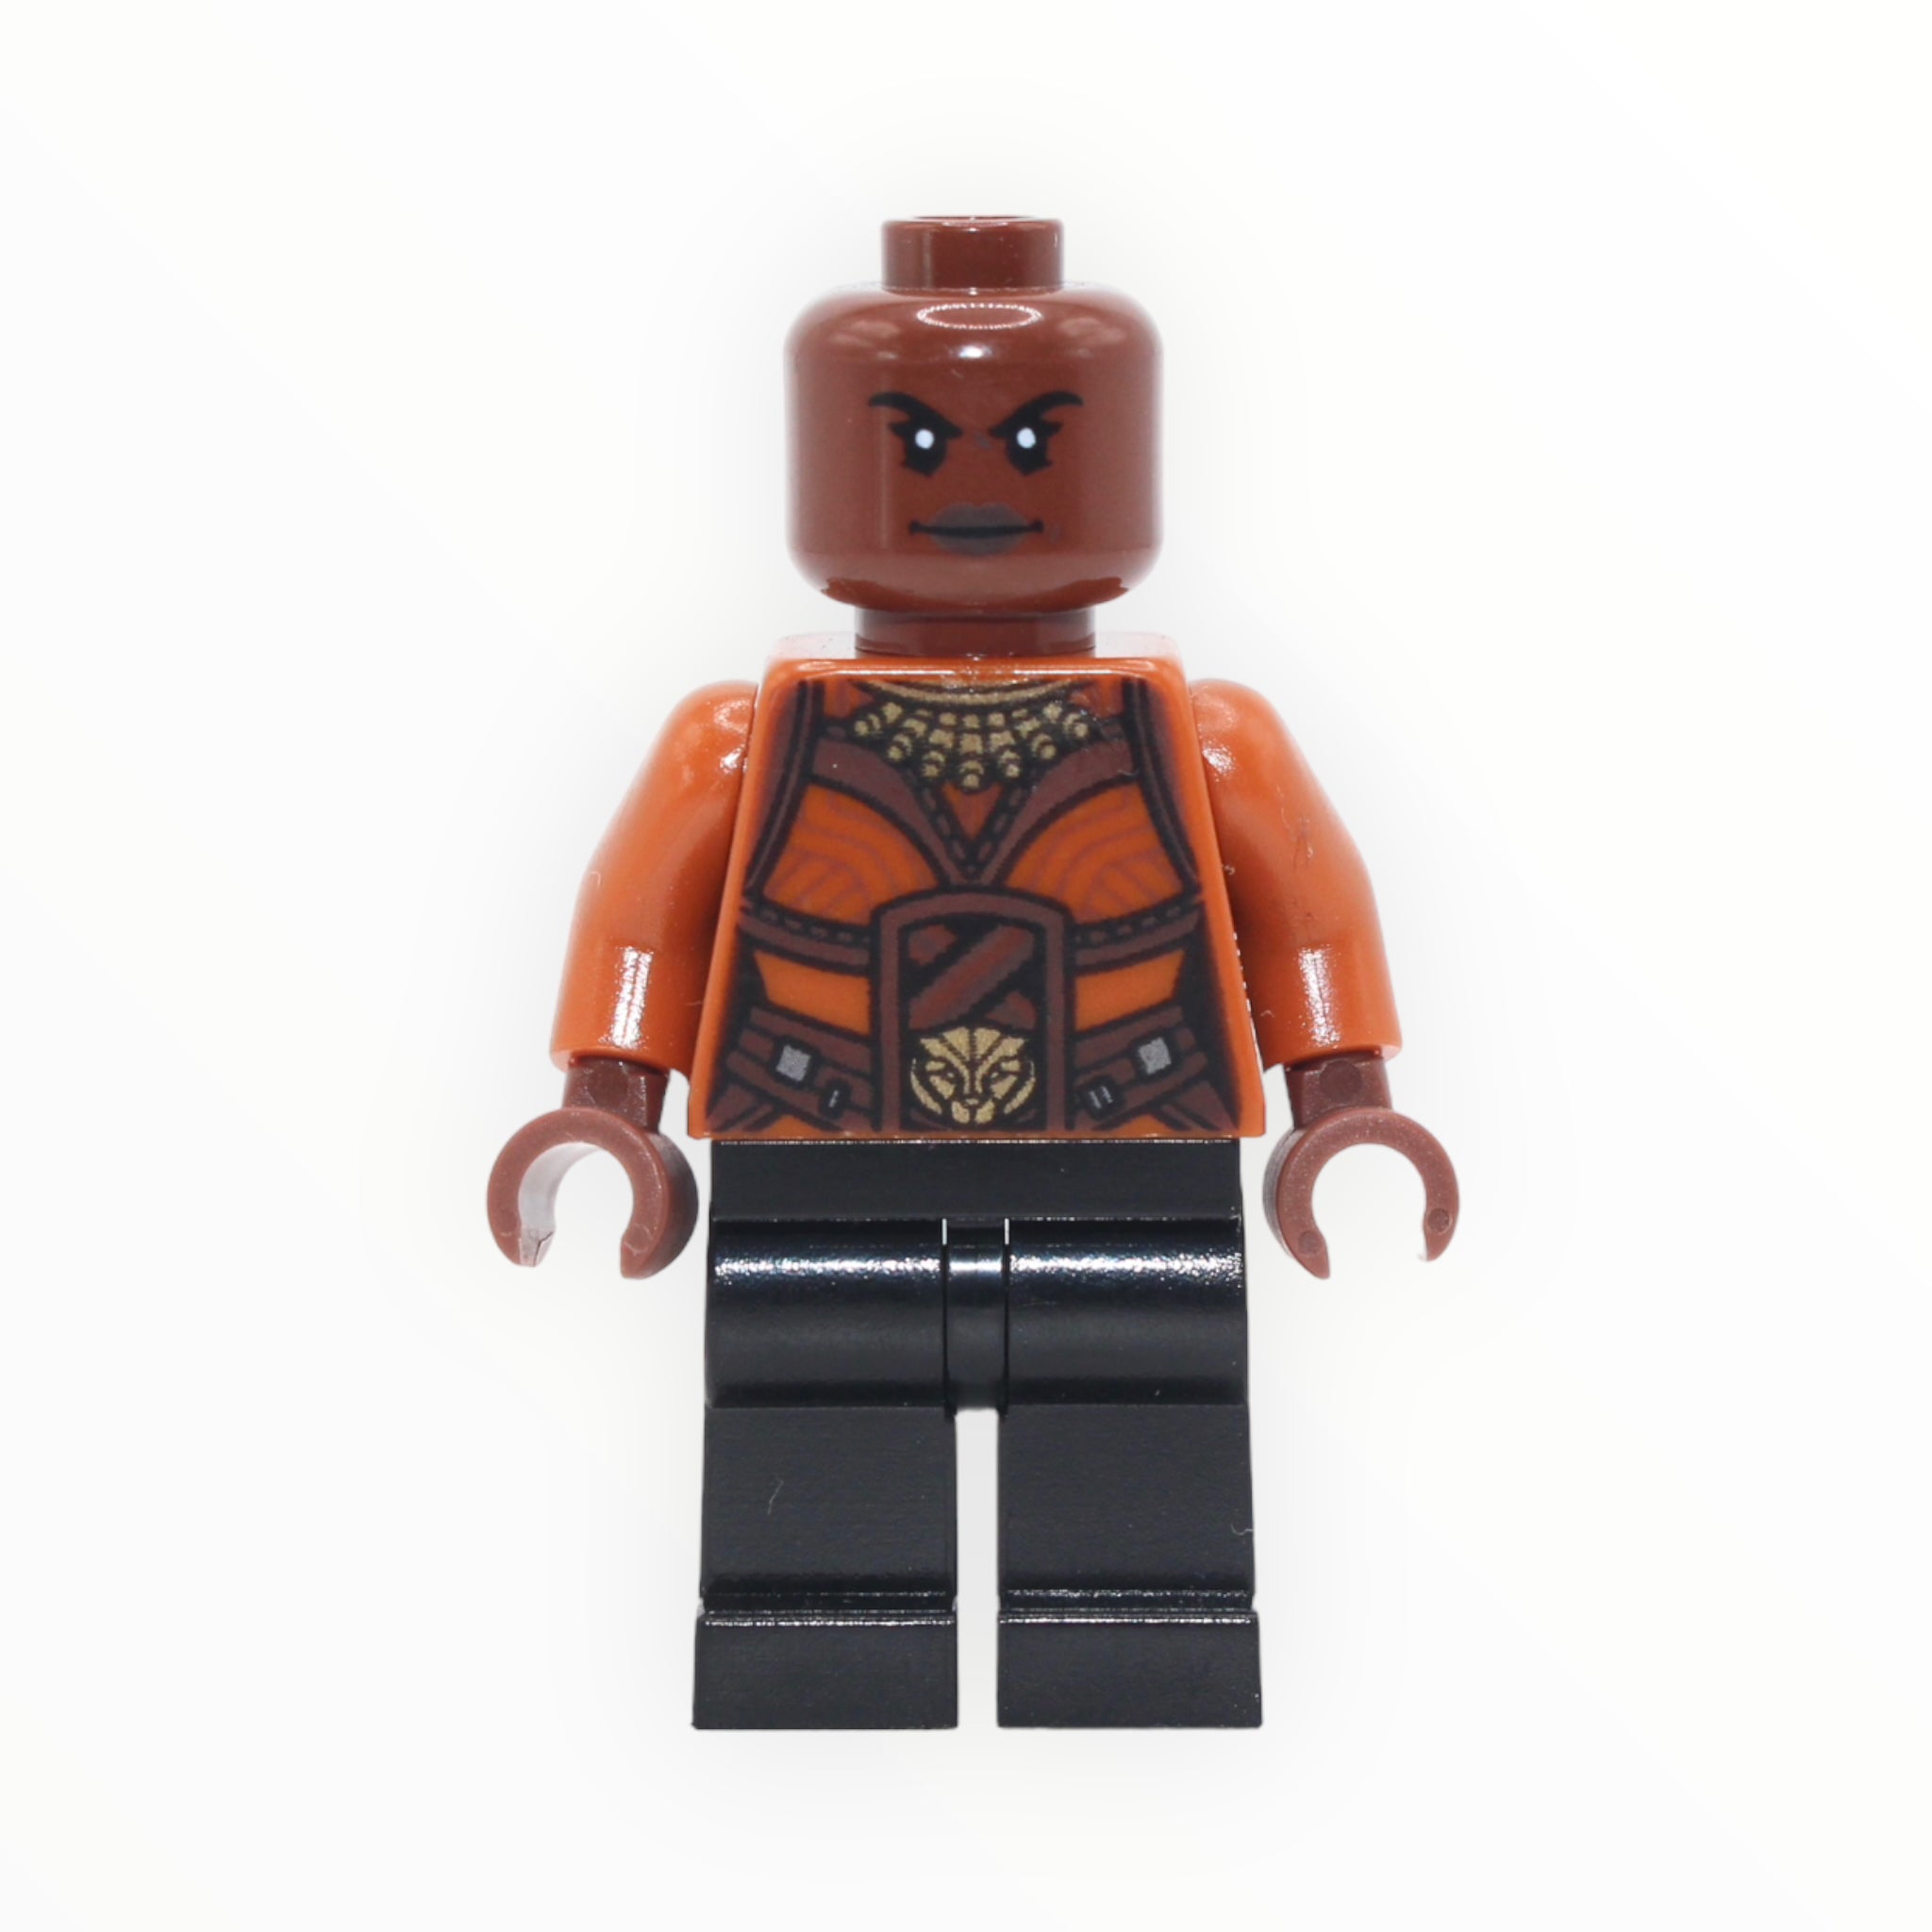 Okoye (dark orange torso, 2018)